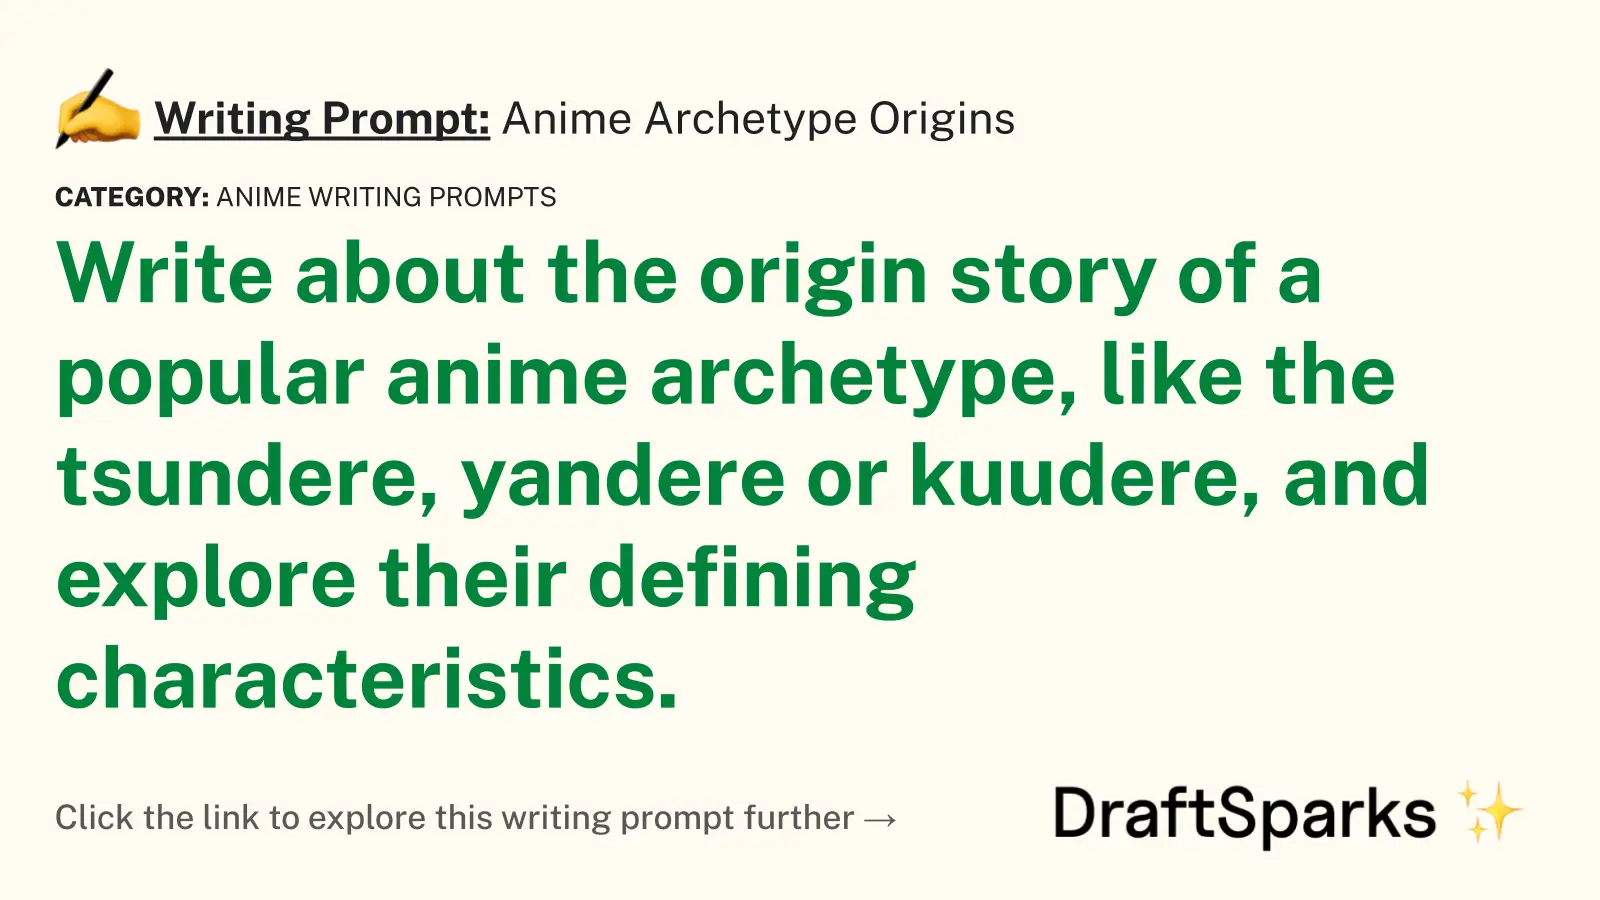 Anime Archetype Origins